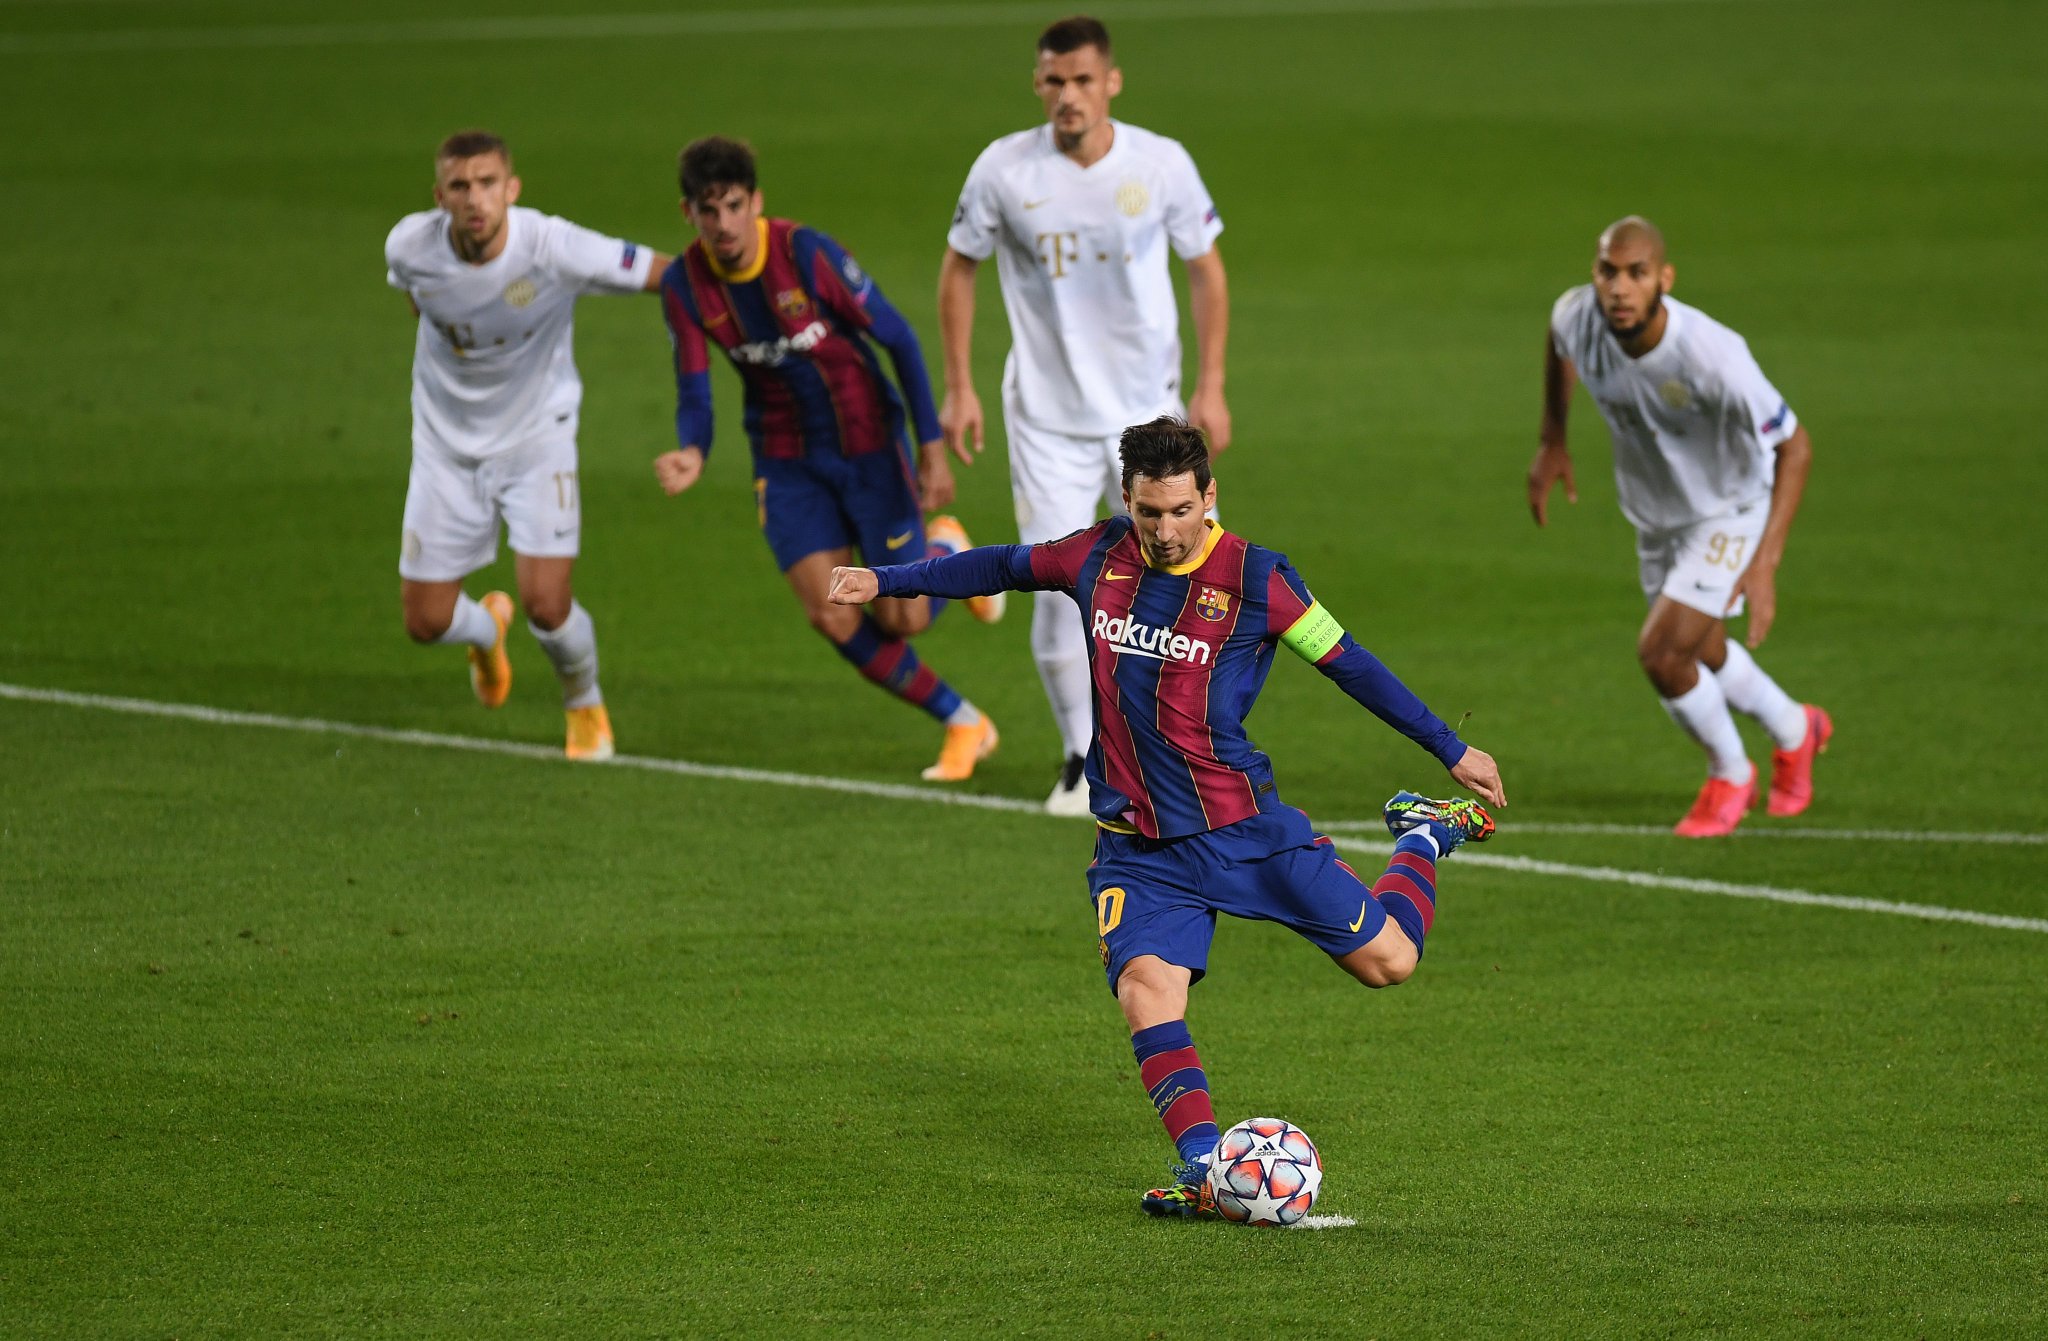 La Liga: Lionel Messi scores twice as Barcelona beat Elche 3-0 to keep title hopes alive